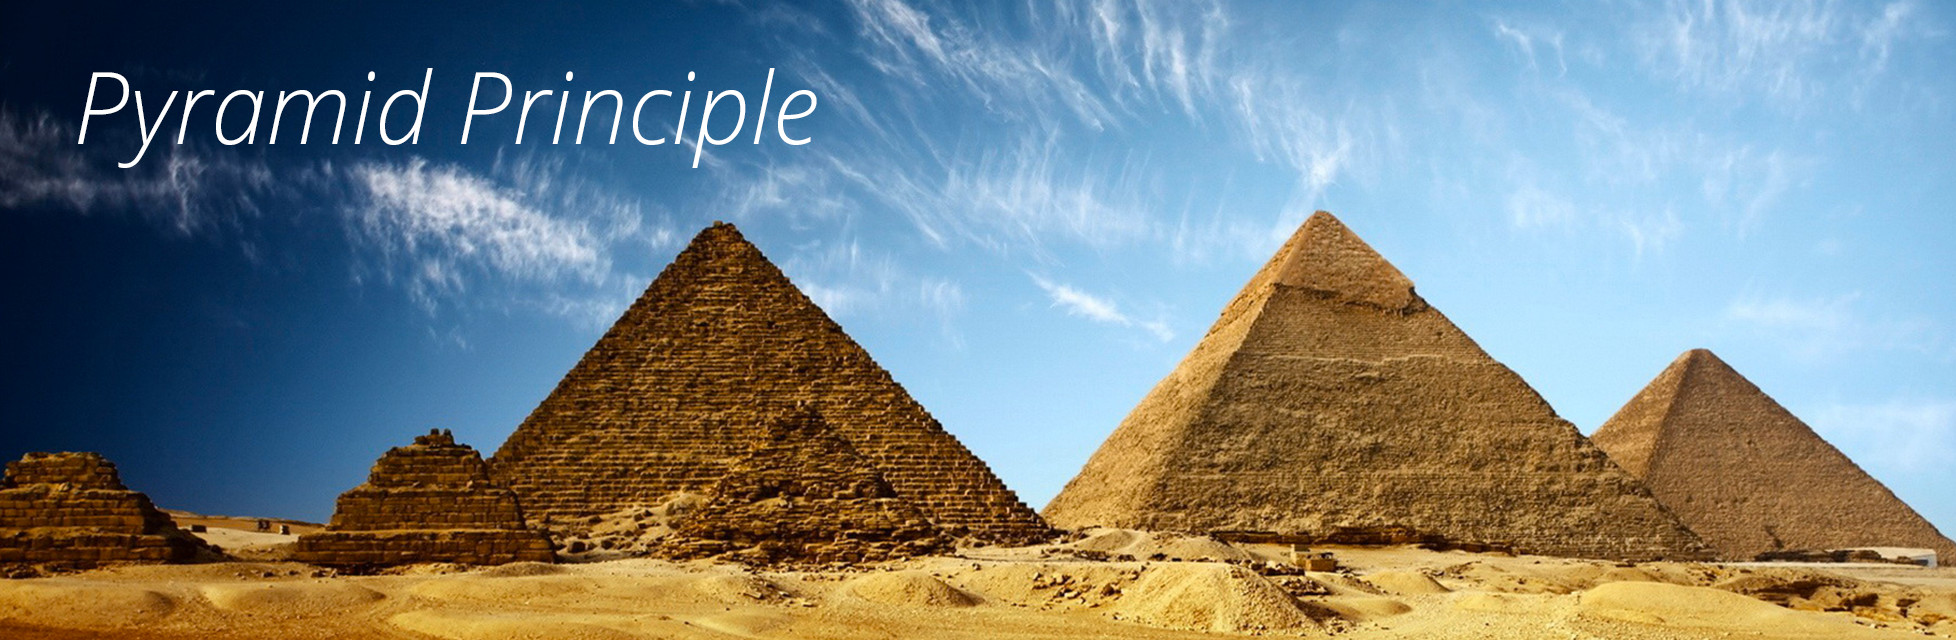 bannerPyramid Principle0